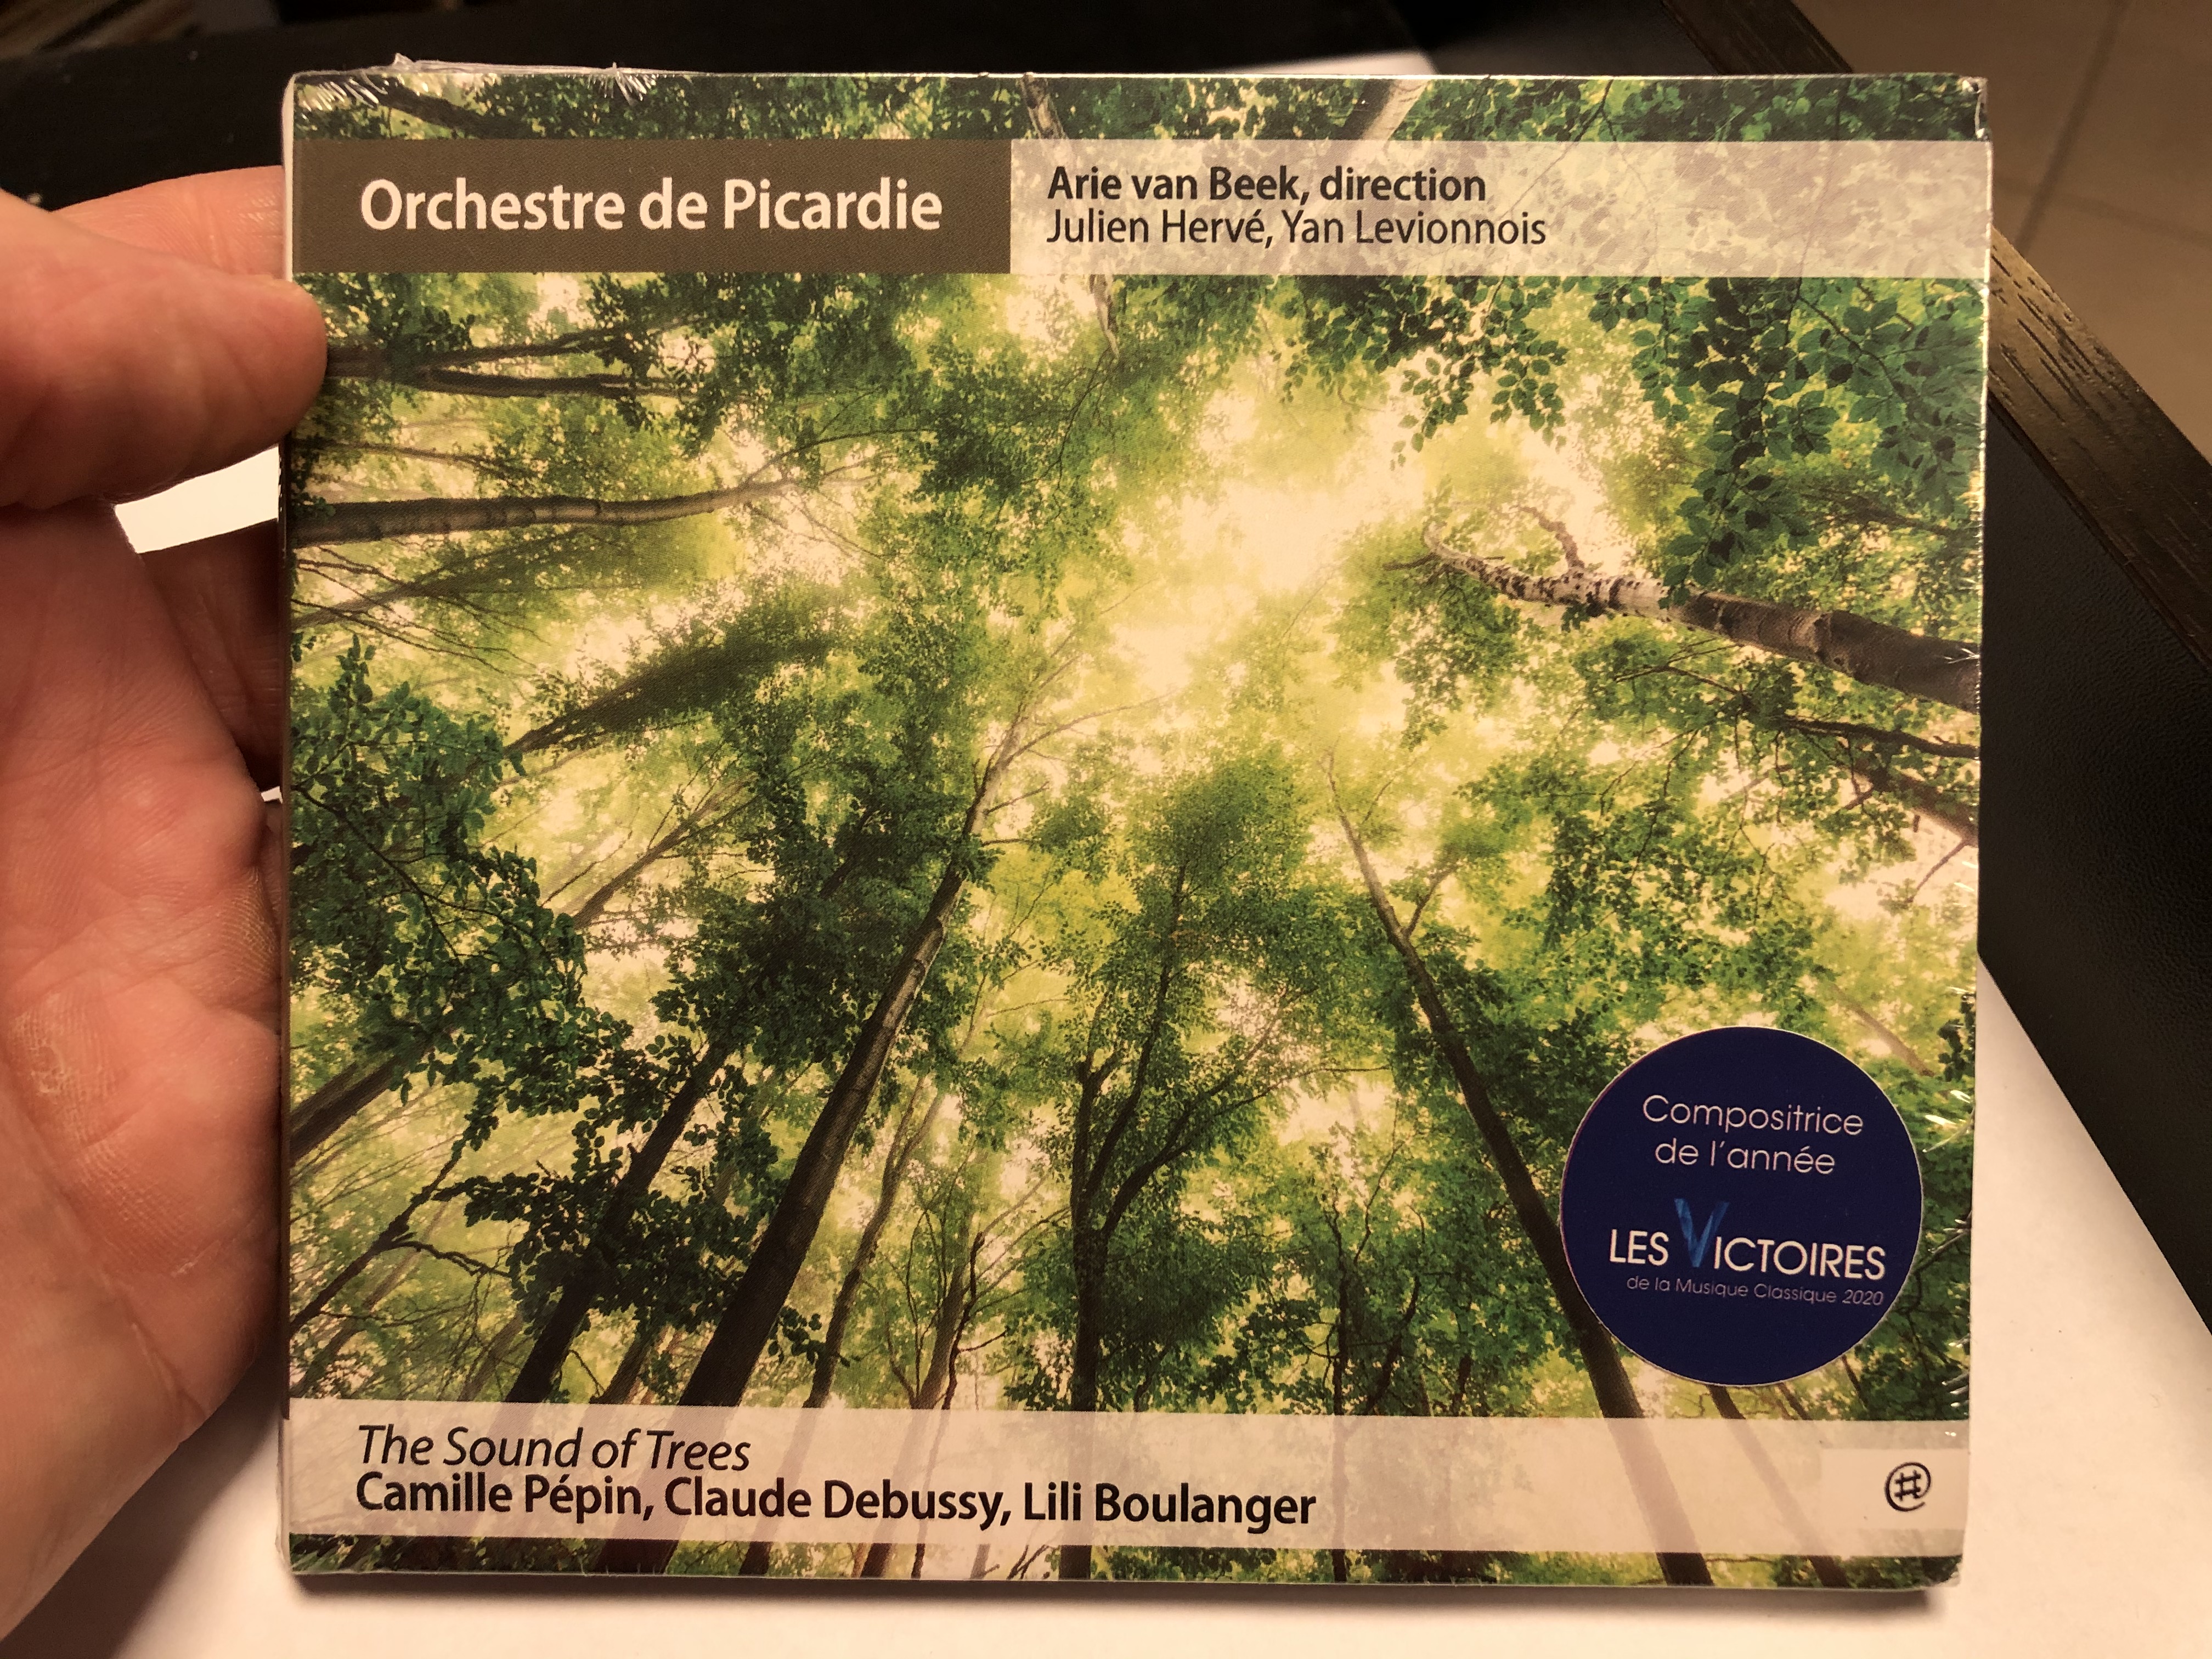 orchestre-de-picardie-arie-van-beek-direction-julien-herve-yan-levionnois-the-sound-of-trees-camille-p-pin-claude-debussy-lili-boulanger-nomadmusic-audio-cd-2020-nmm074-1-.jpg